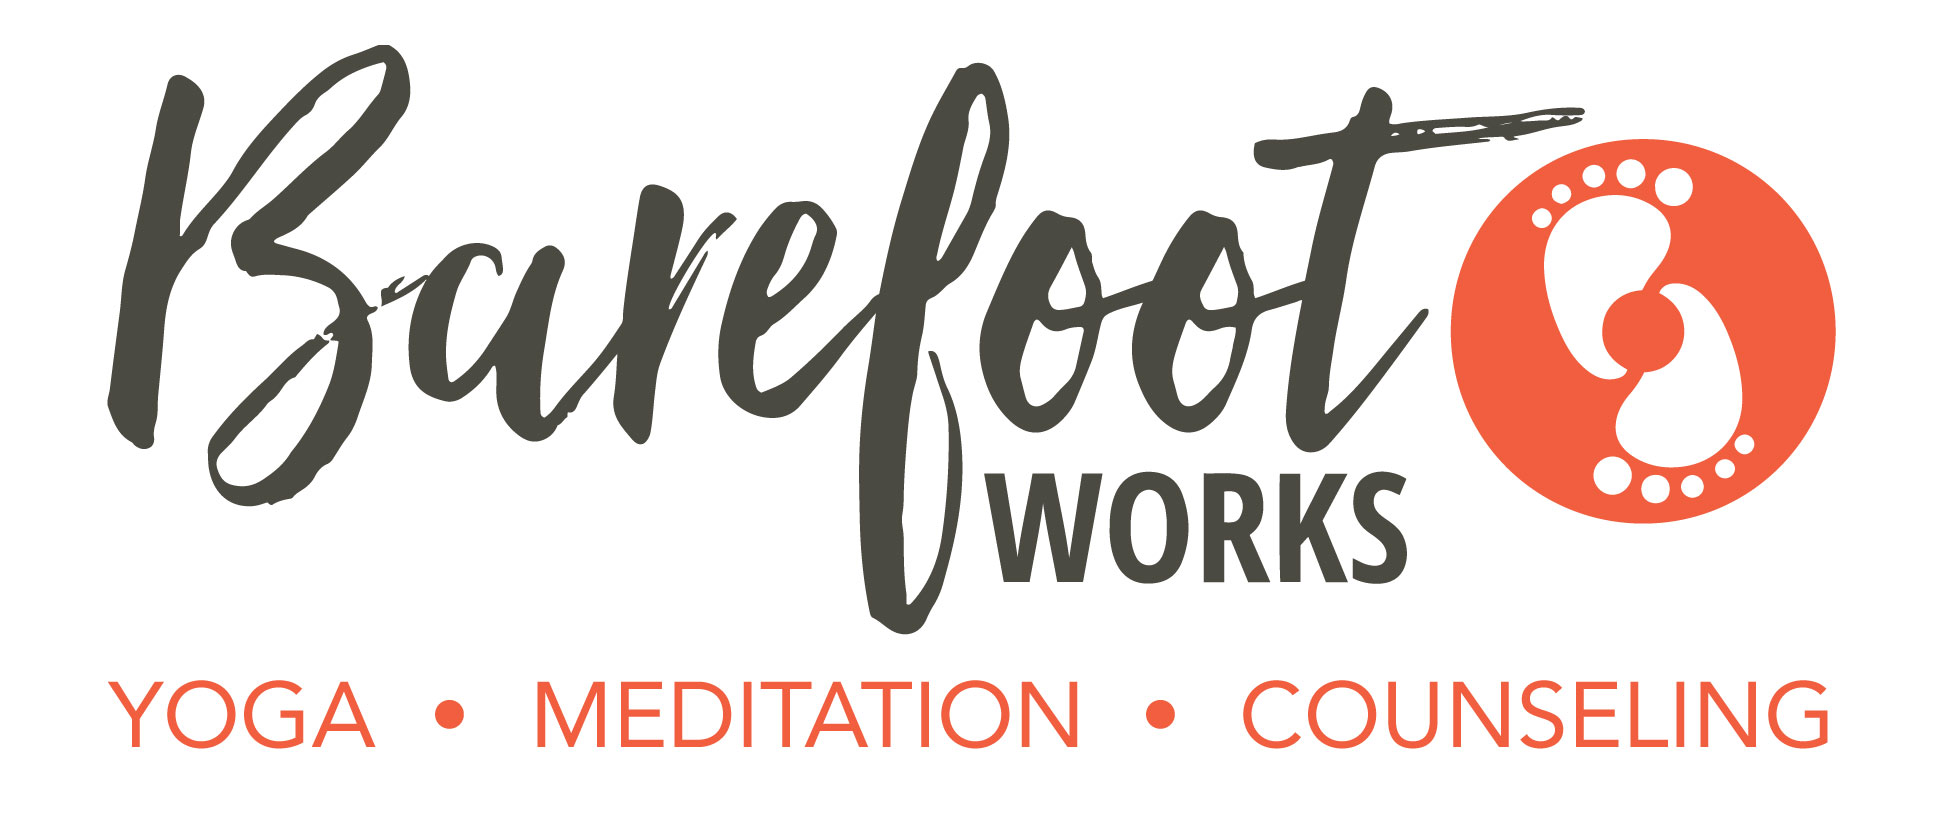 Barefoot Works Yoga Studio | Yoga and Wellness Studio located in ...